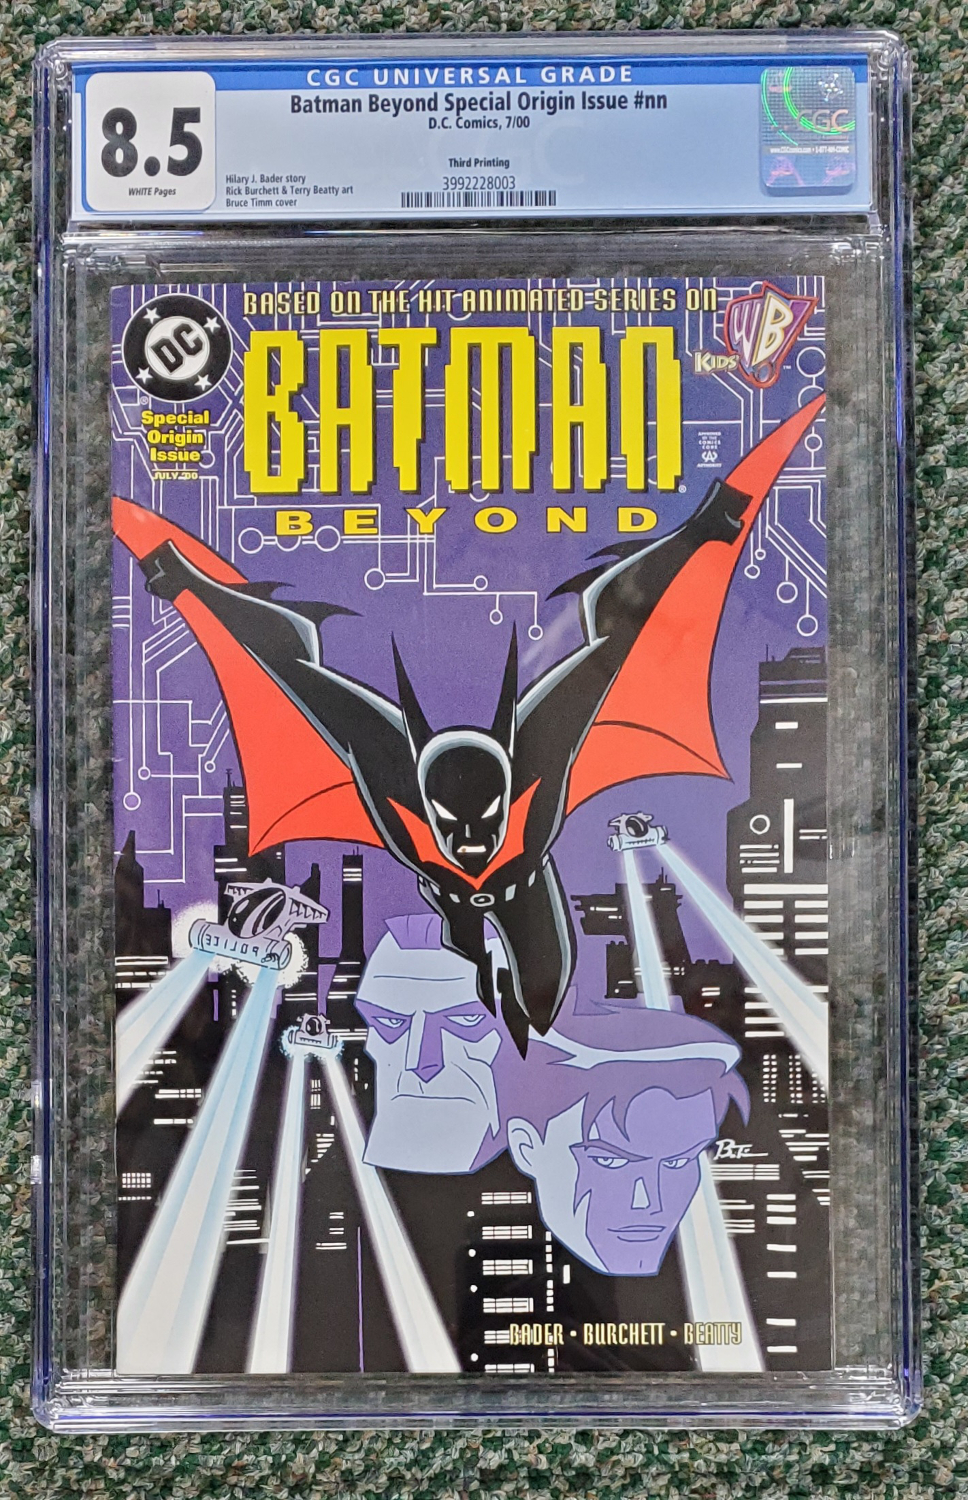 CGC-Graded 8.5 Batman Beyond Special Origin Issue: Super Rare Third Printing